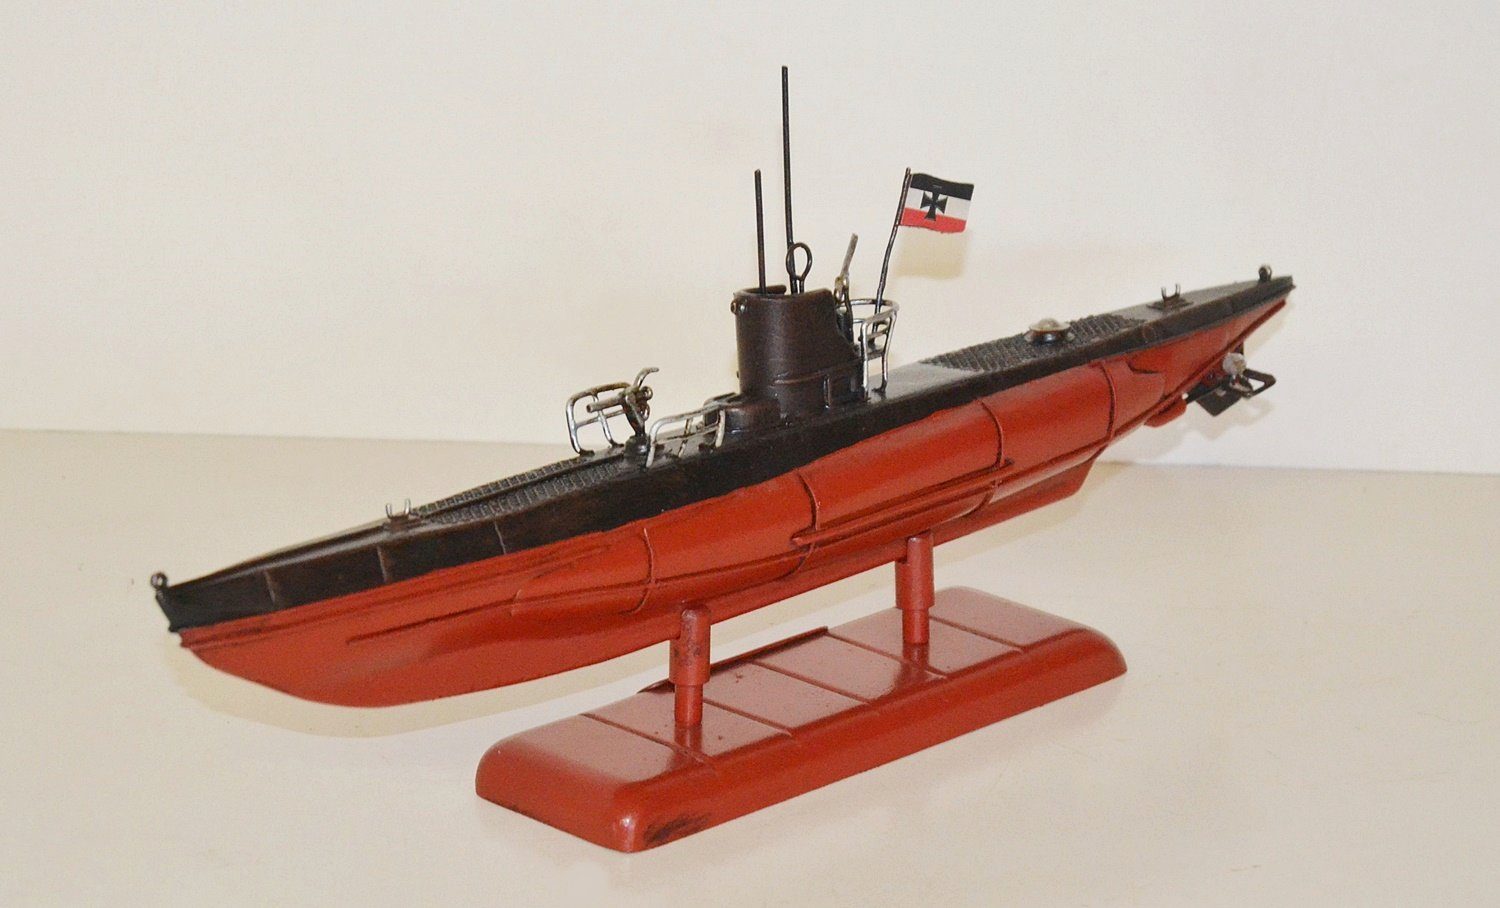 JS GartenDeko Modellboot Blechmodell Modell U-Boot Deutsche Kriegsmarine Deko Figur L 40 cm